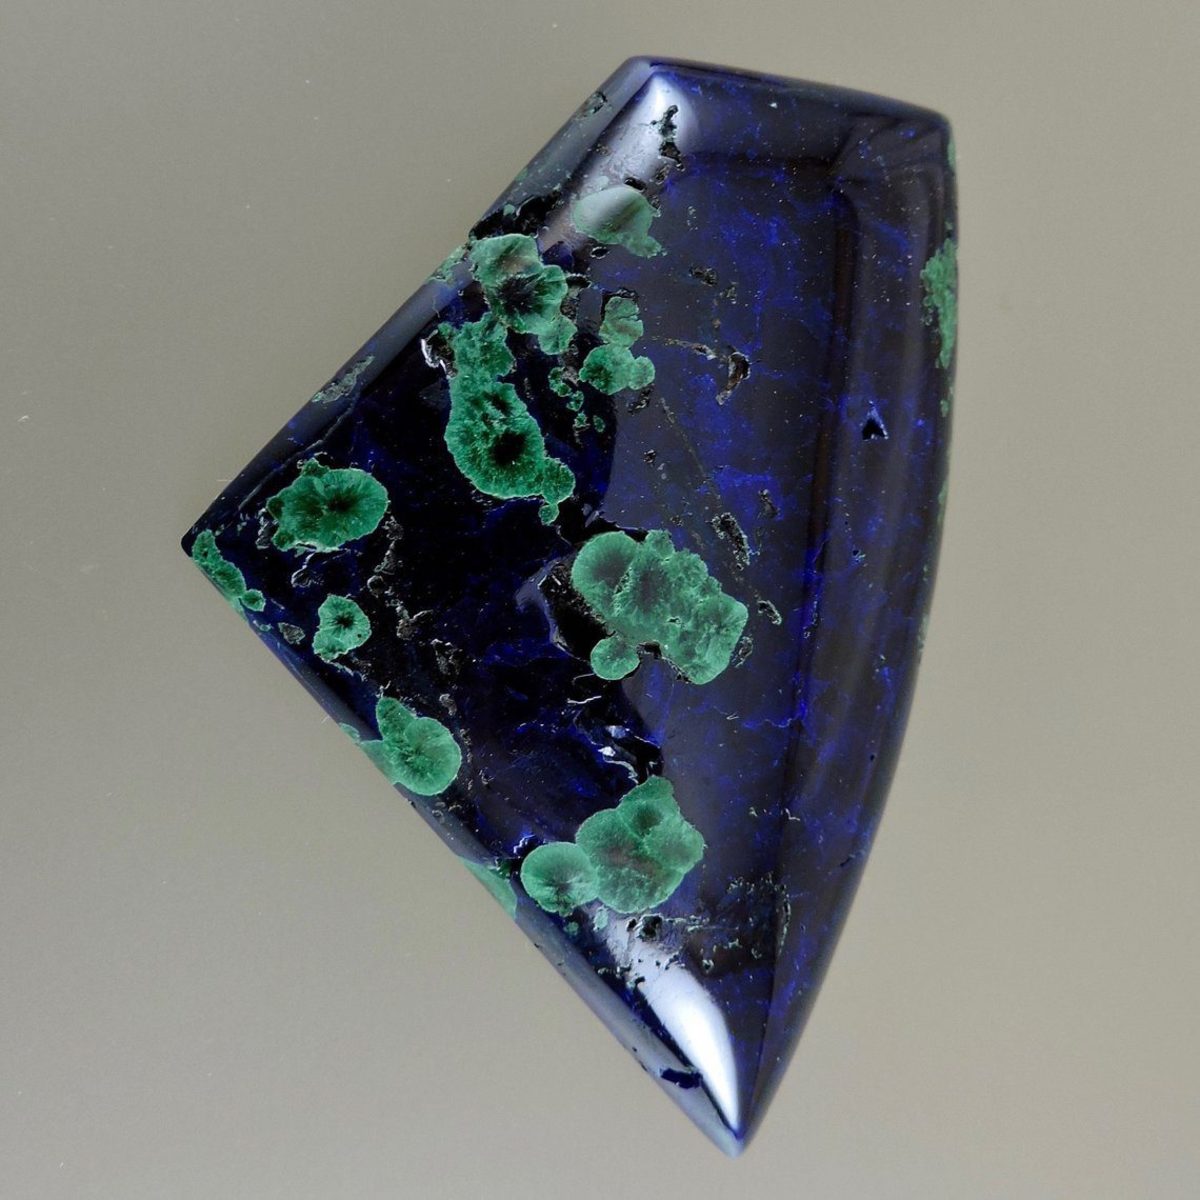 Deep blue azurite cabochon with green malachite